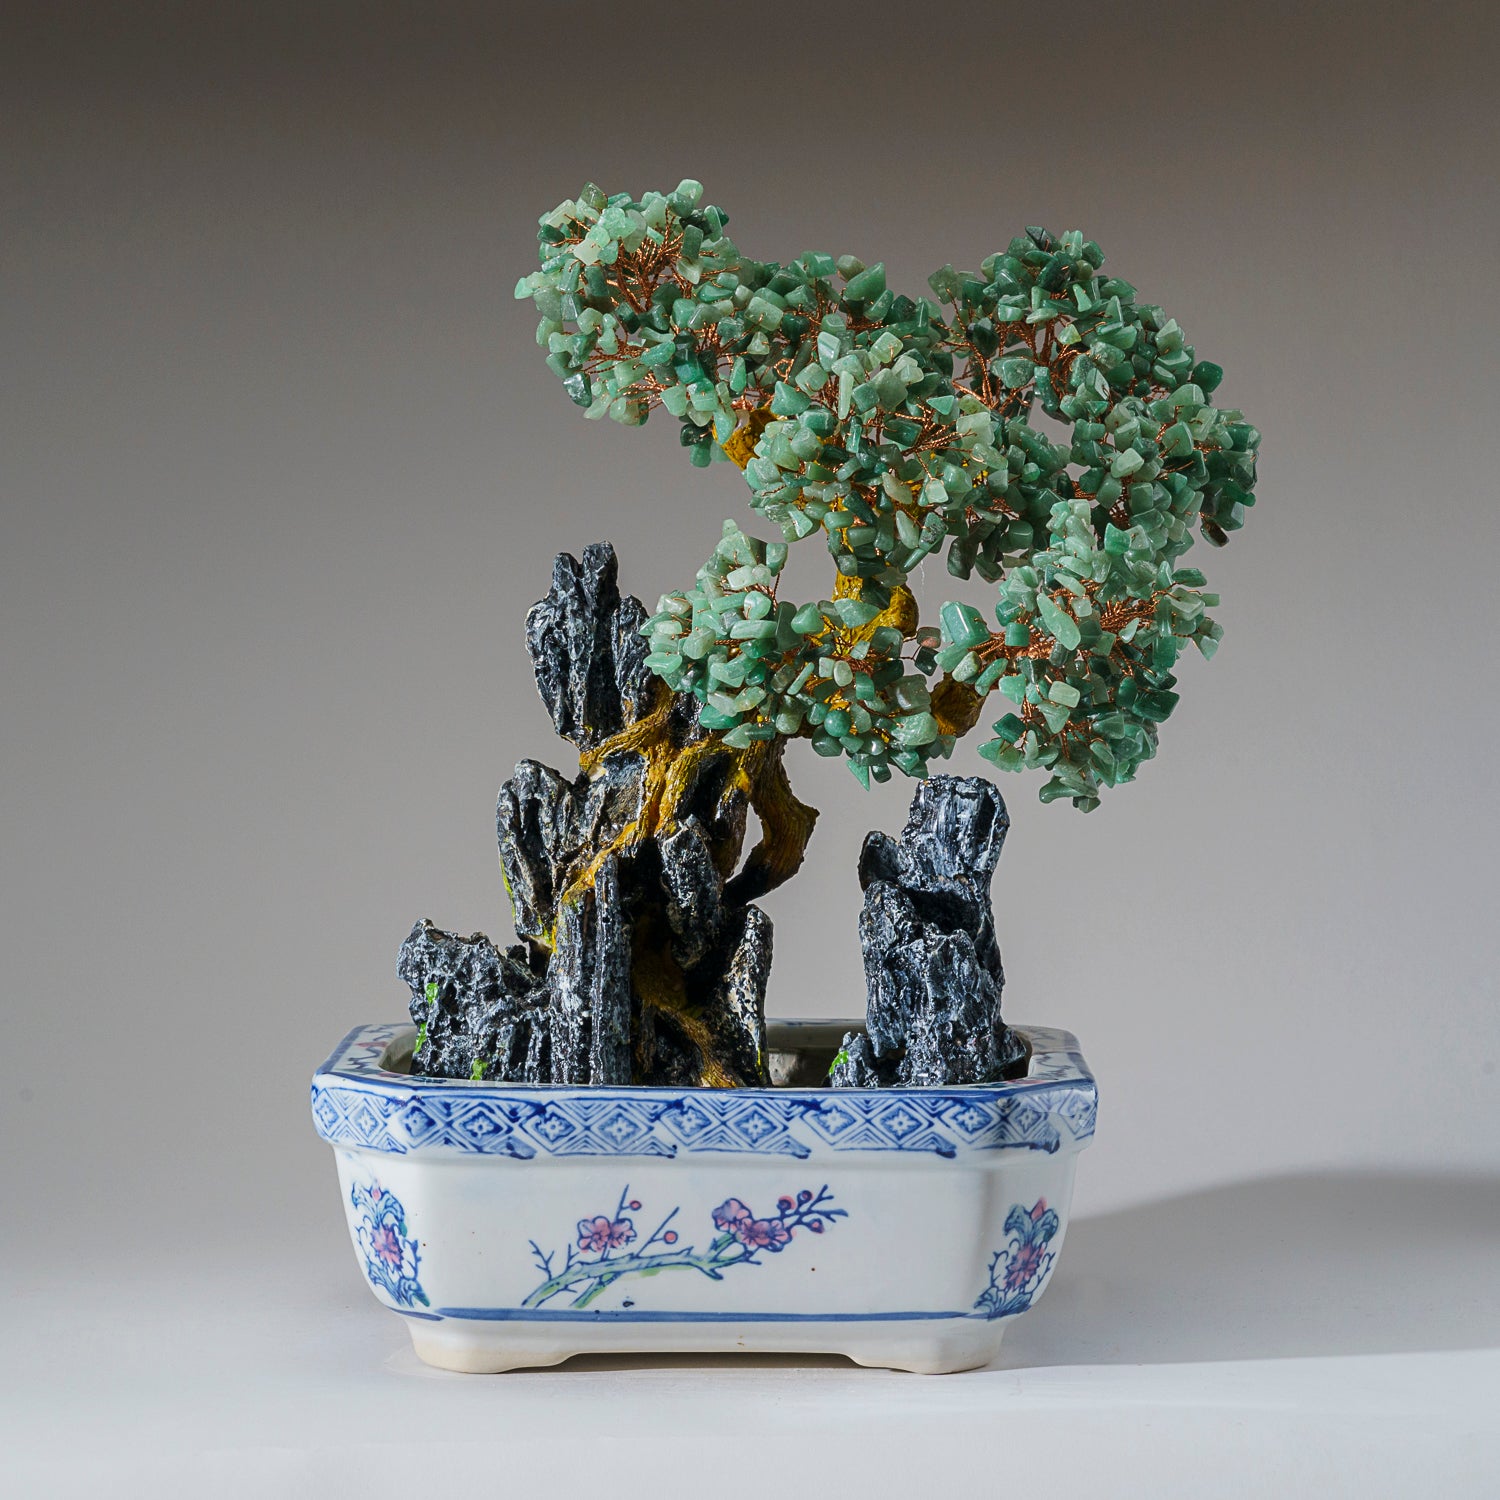 Genuine Green Aventurine Bonsai Tree in Square Ceramic Pot (13” Tall)